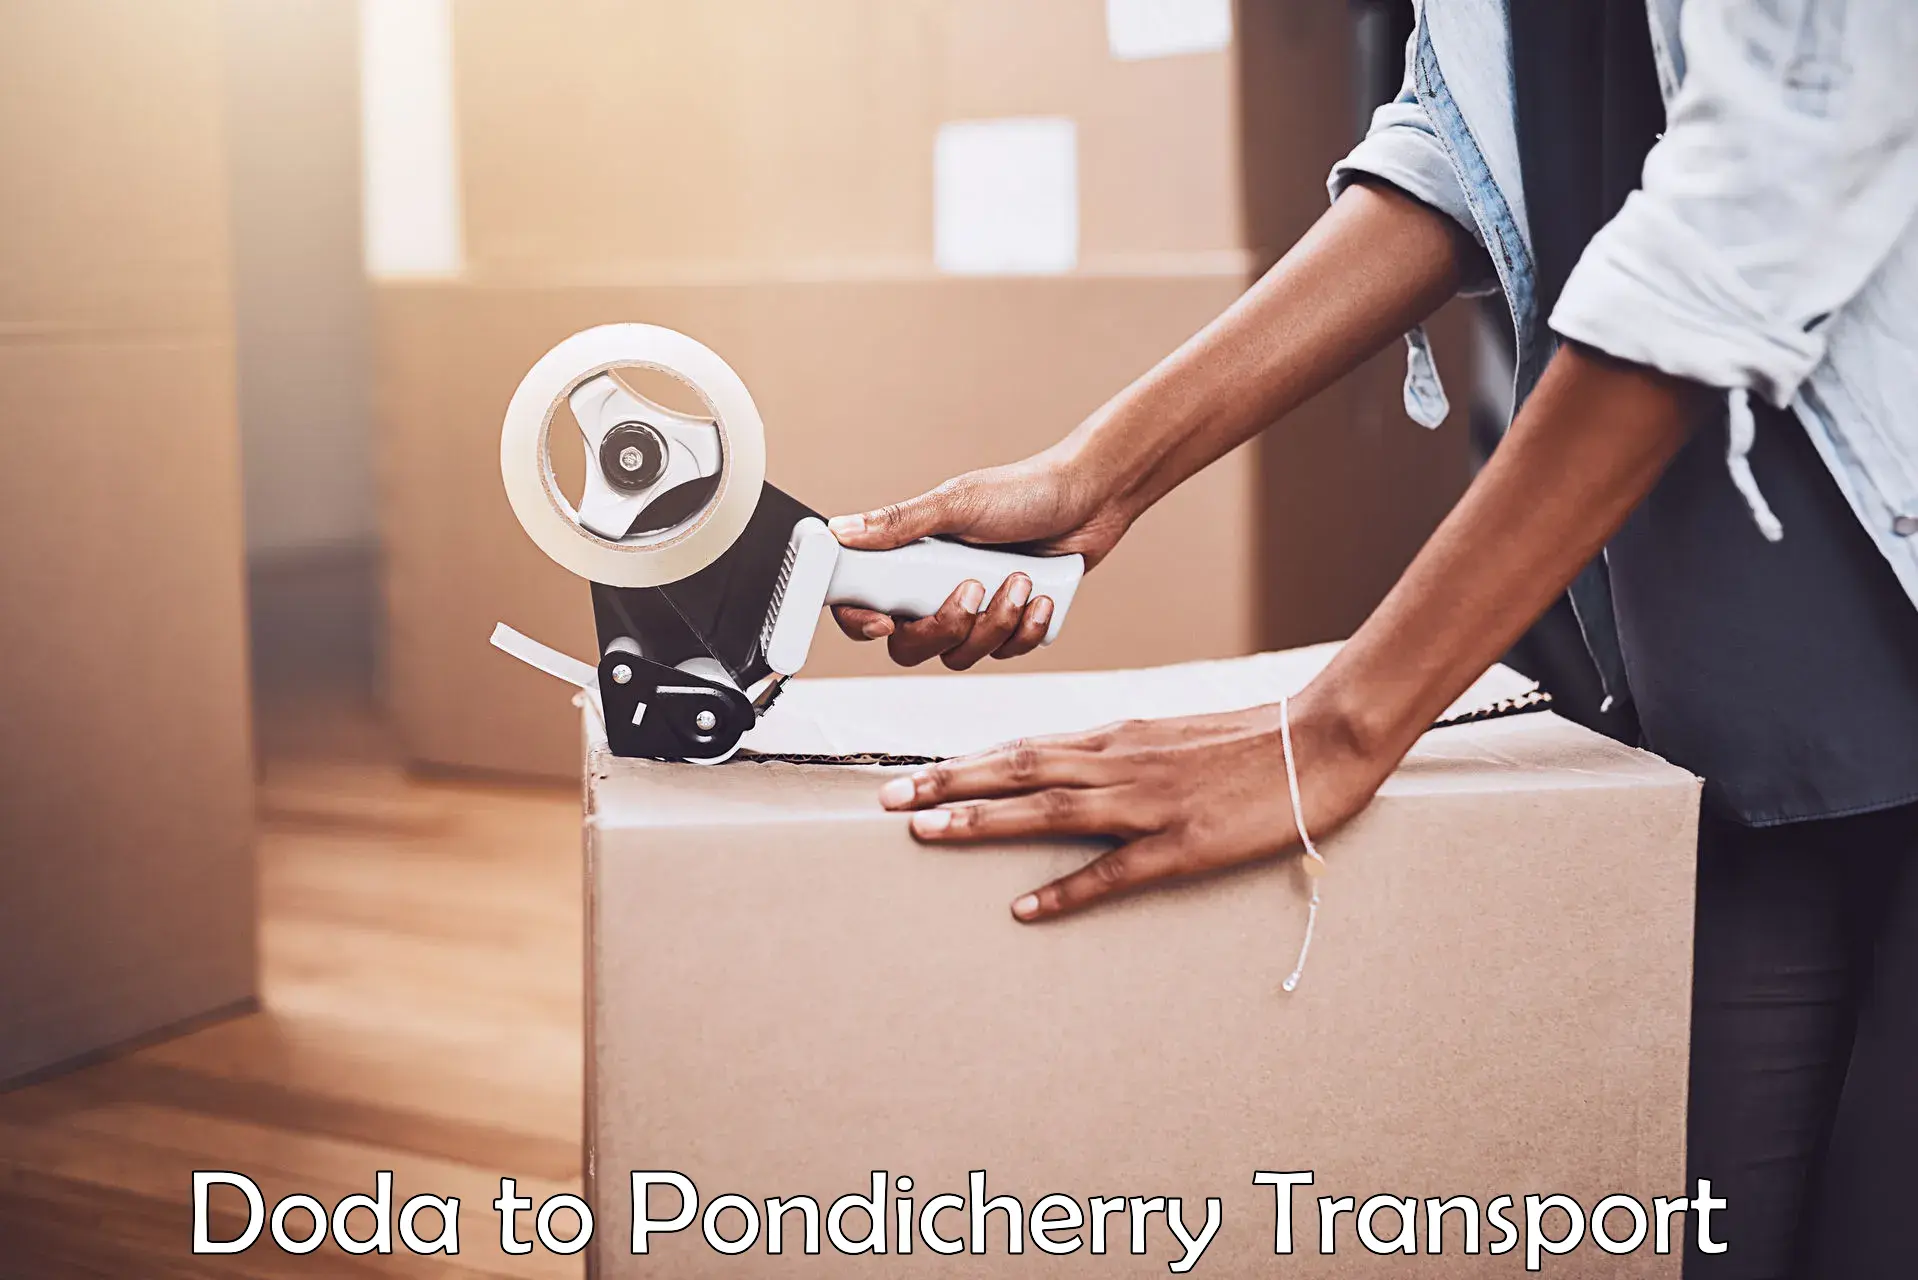 Goods delivery service Doda to Pondicherry